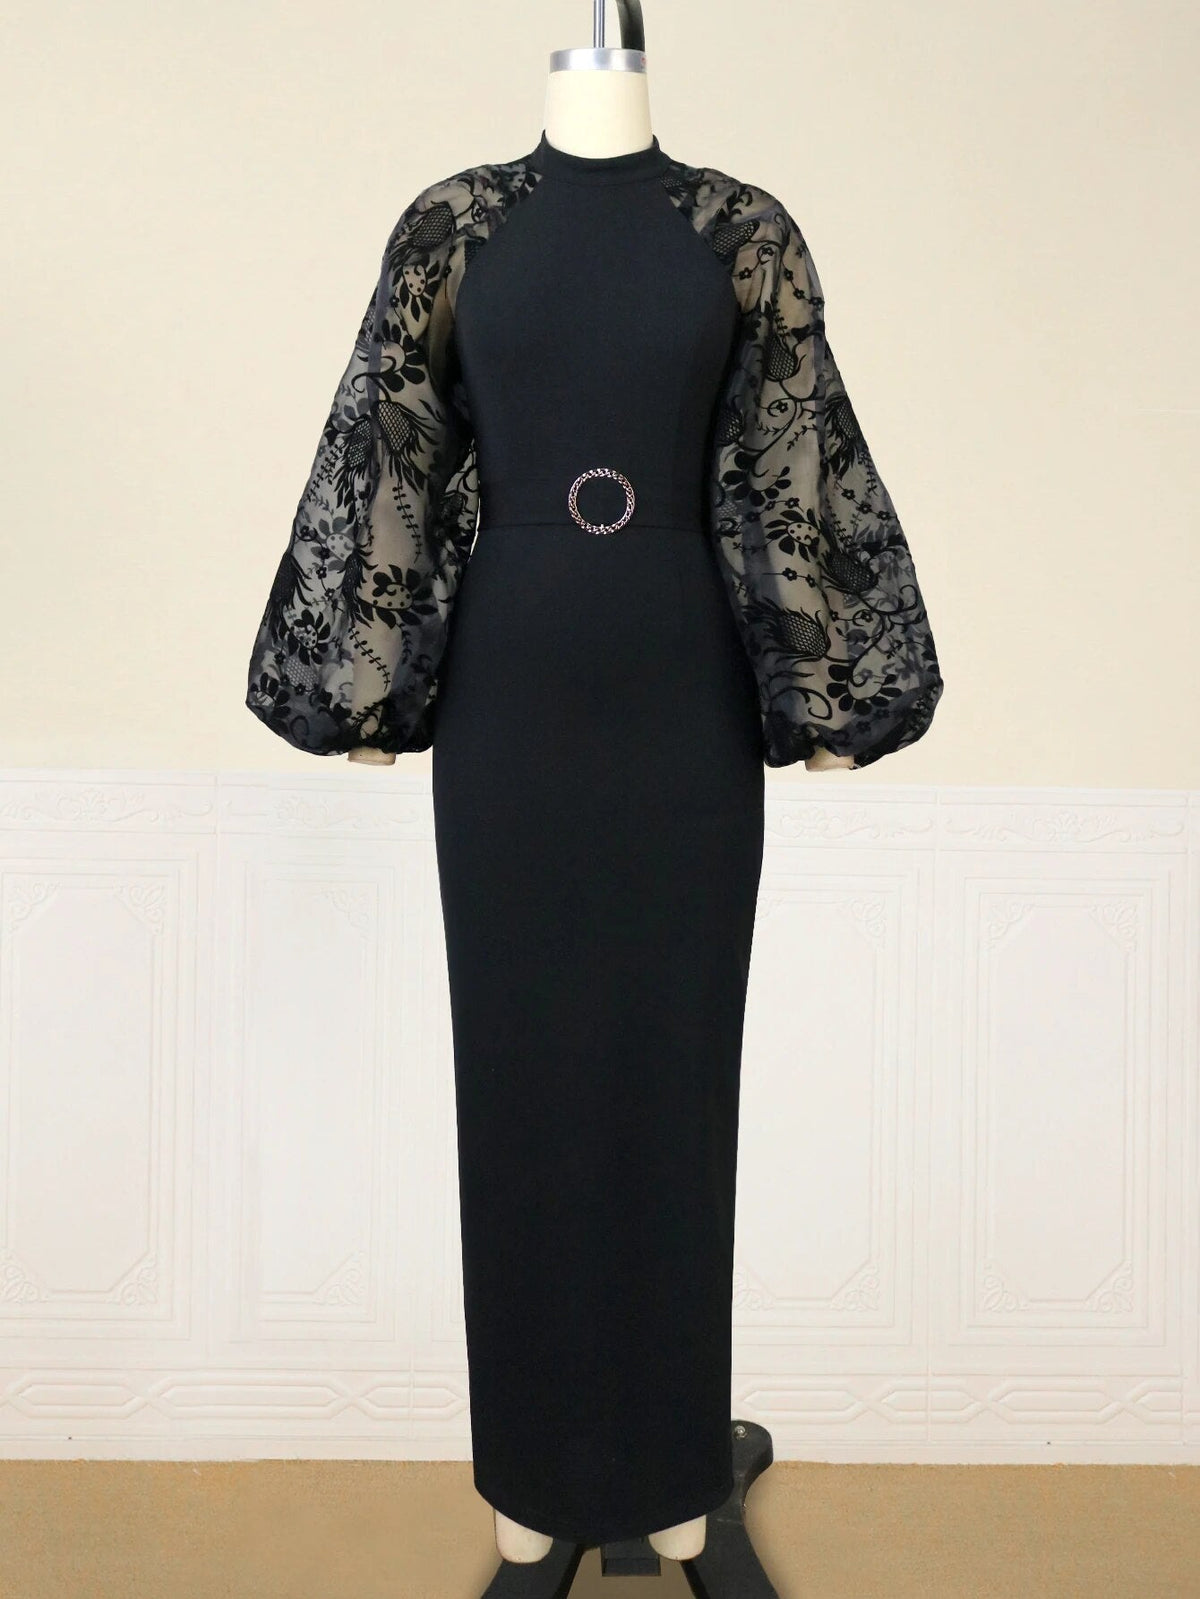 On sale - Black Long Dresses for Women - Black - Free